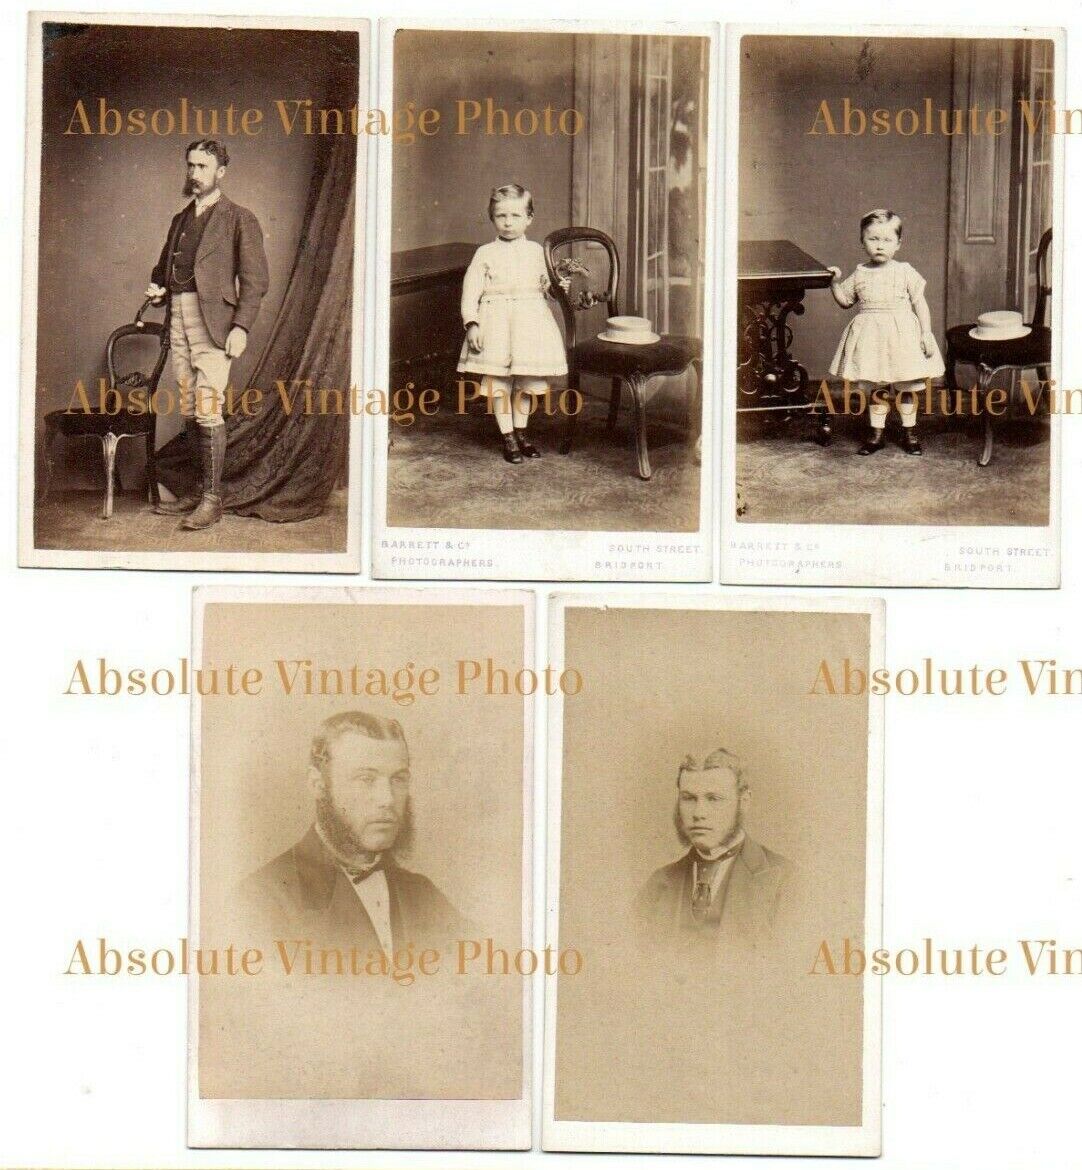 CDV PHOTOGRAPHS BARRETT & CO. STUDIO PORTRAITS BRIDPORT DORSET VINTAGE C.1870